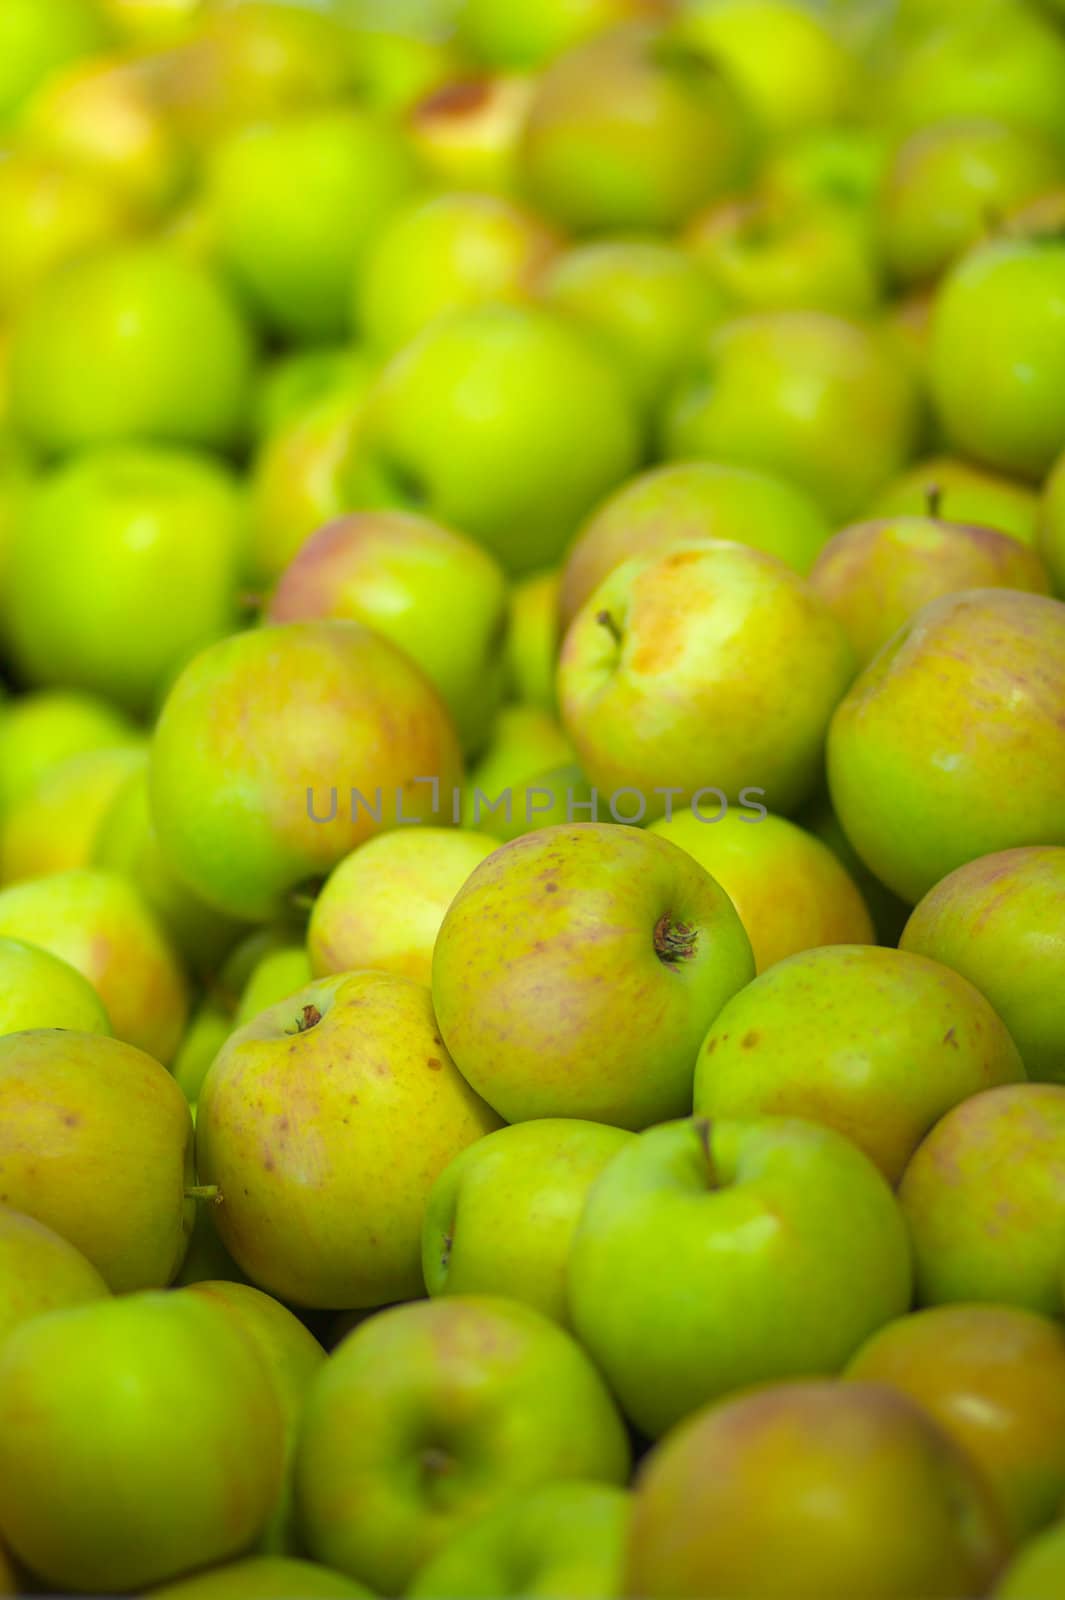 Green Apples by bobkeenan